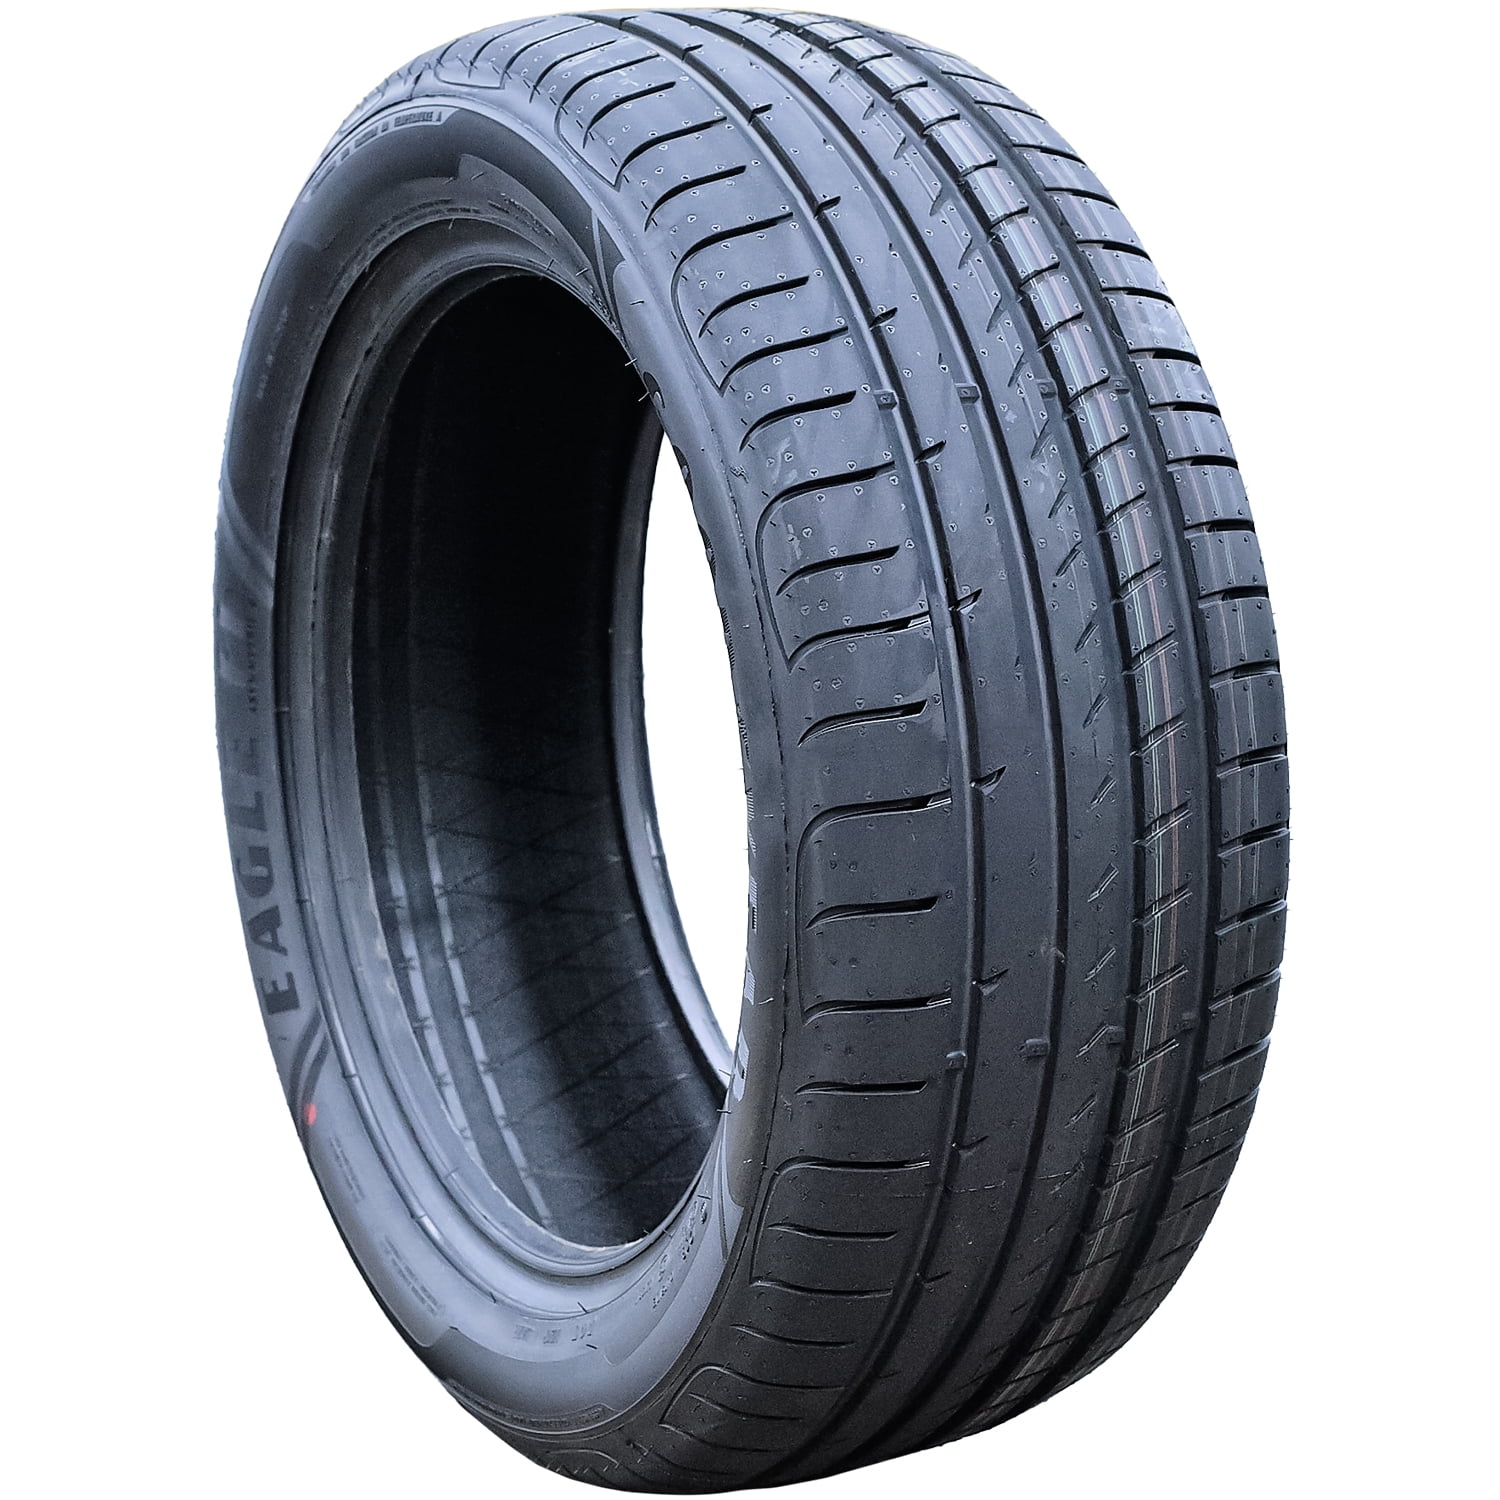 OEM Goodyear F1 Tire Foam Detachment